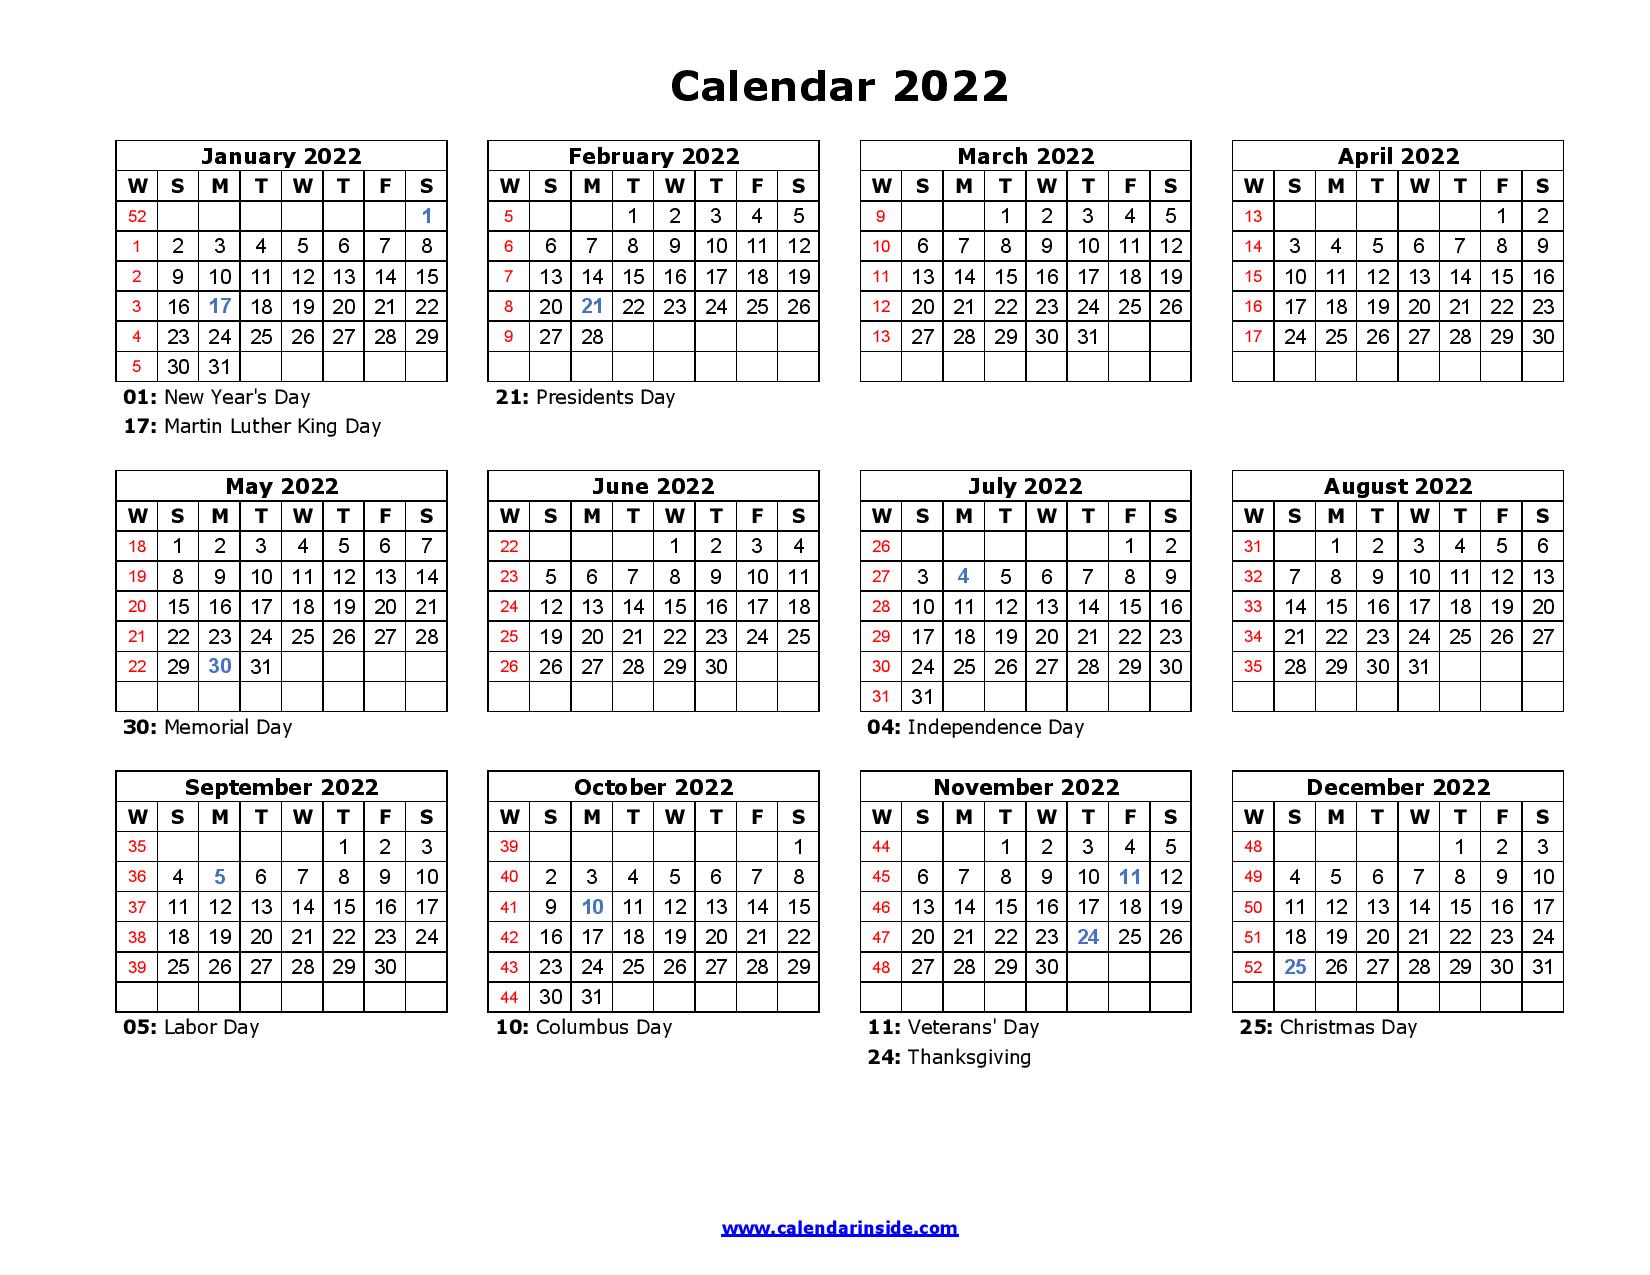 calendar 2022 pdf free download